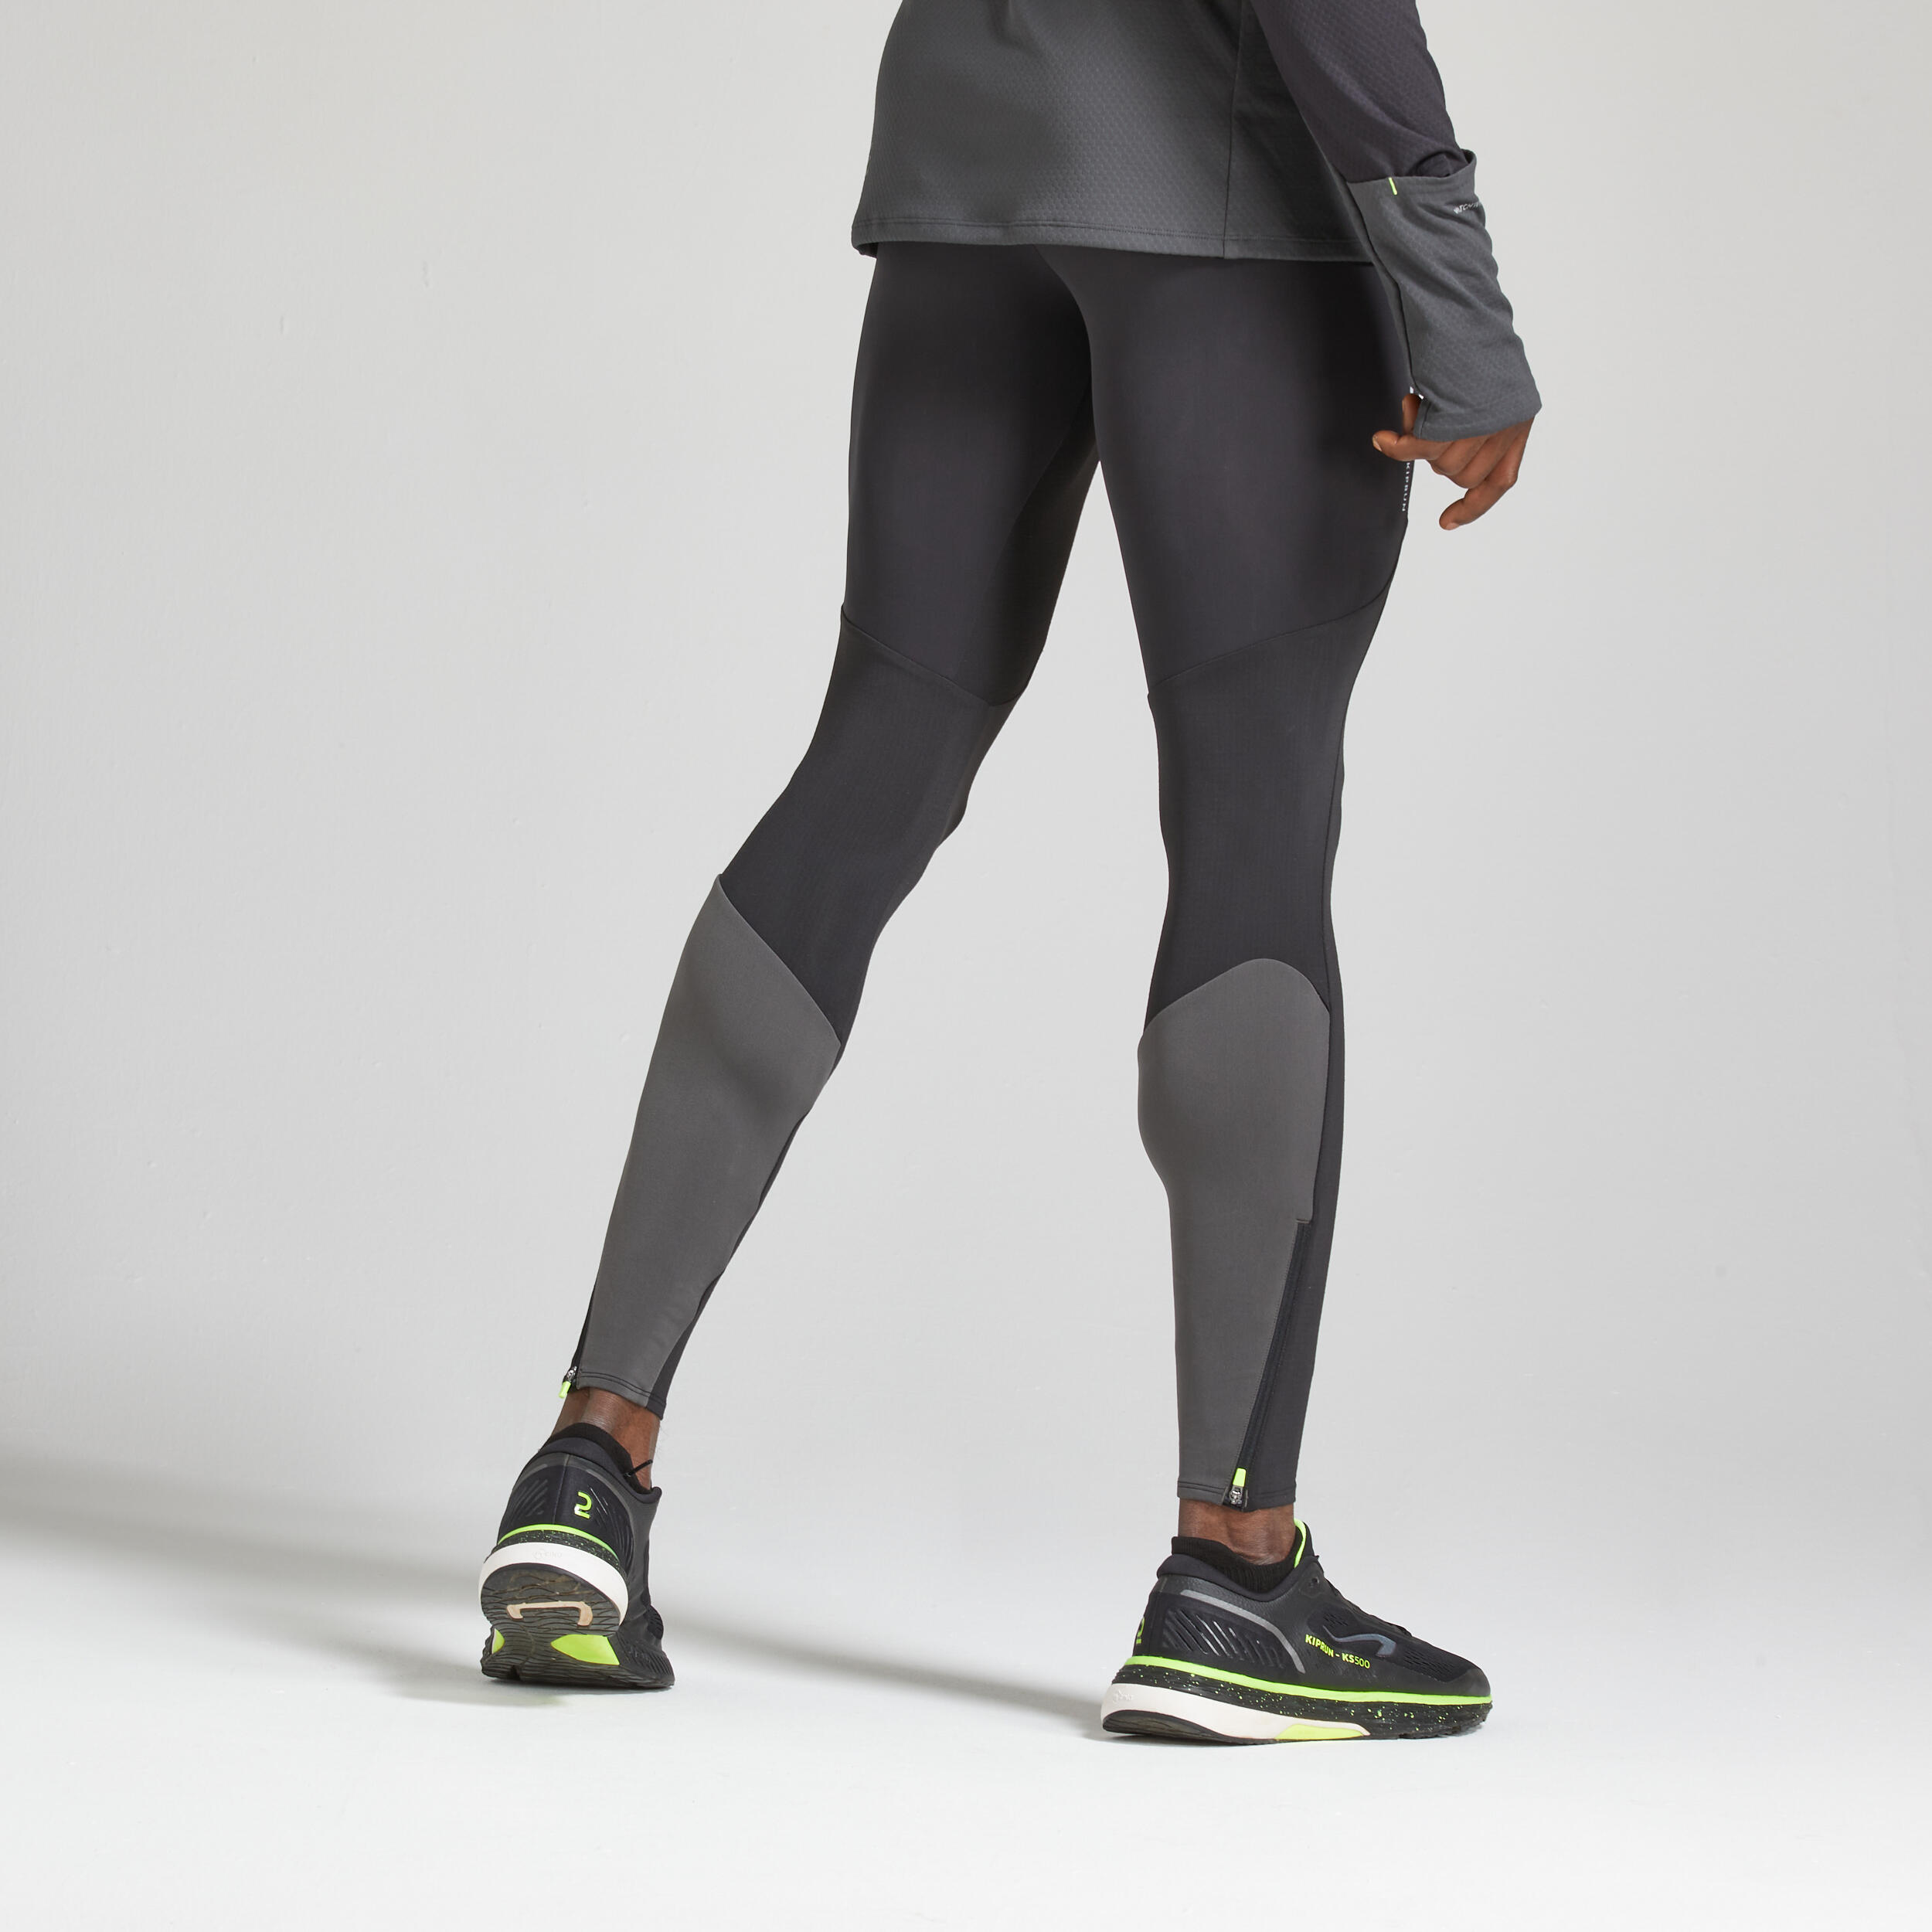 Warm Men's Running Tights - Black/Grey 3/10